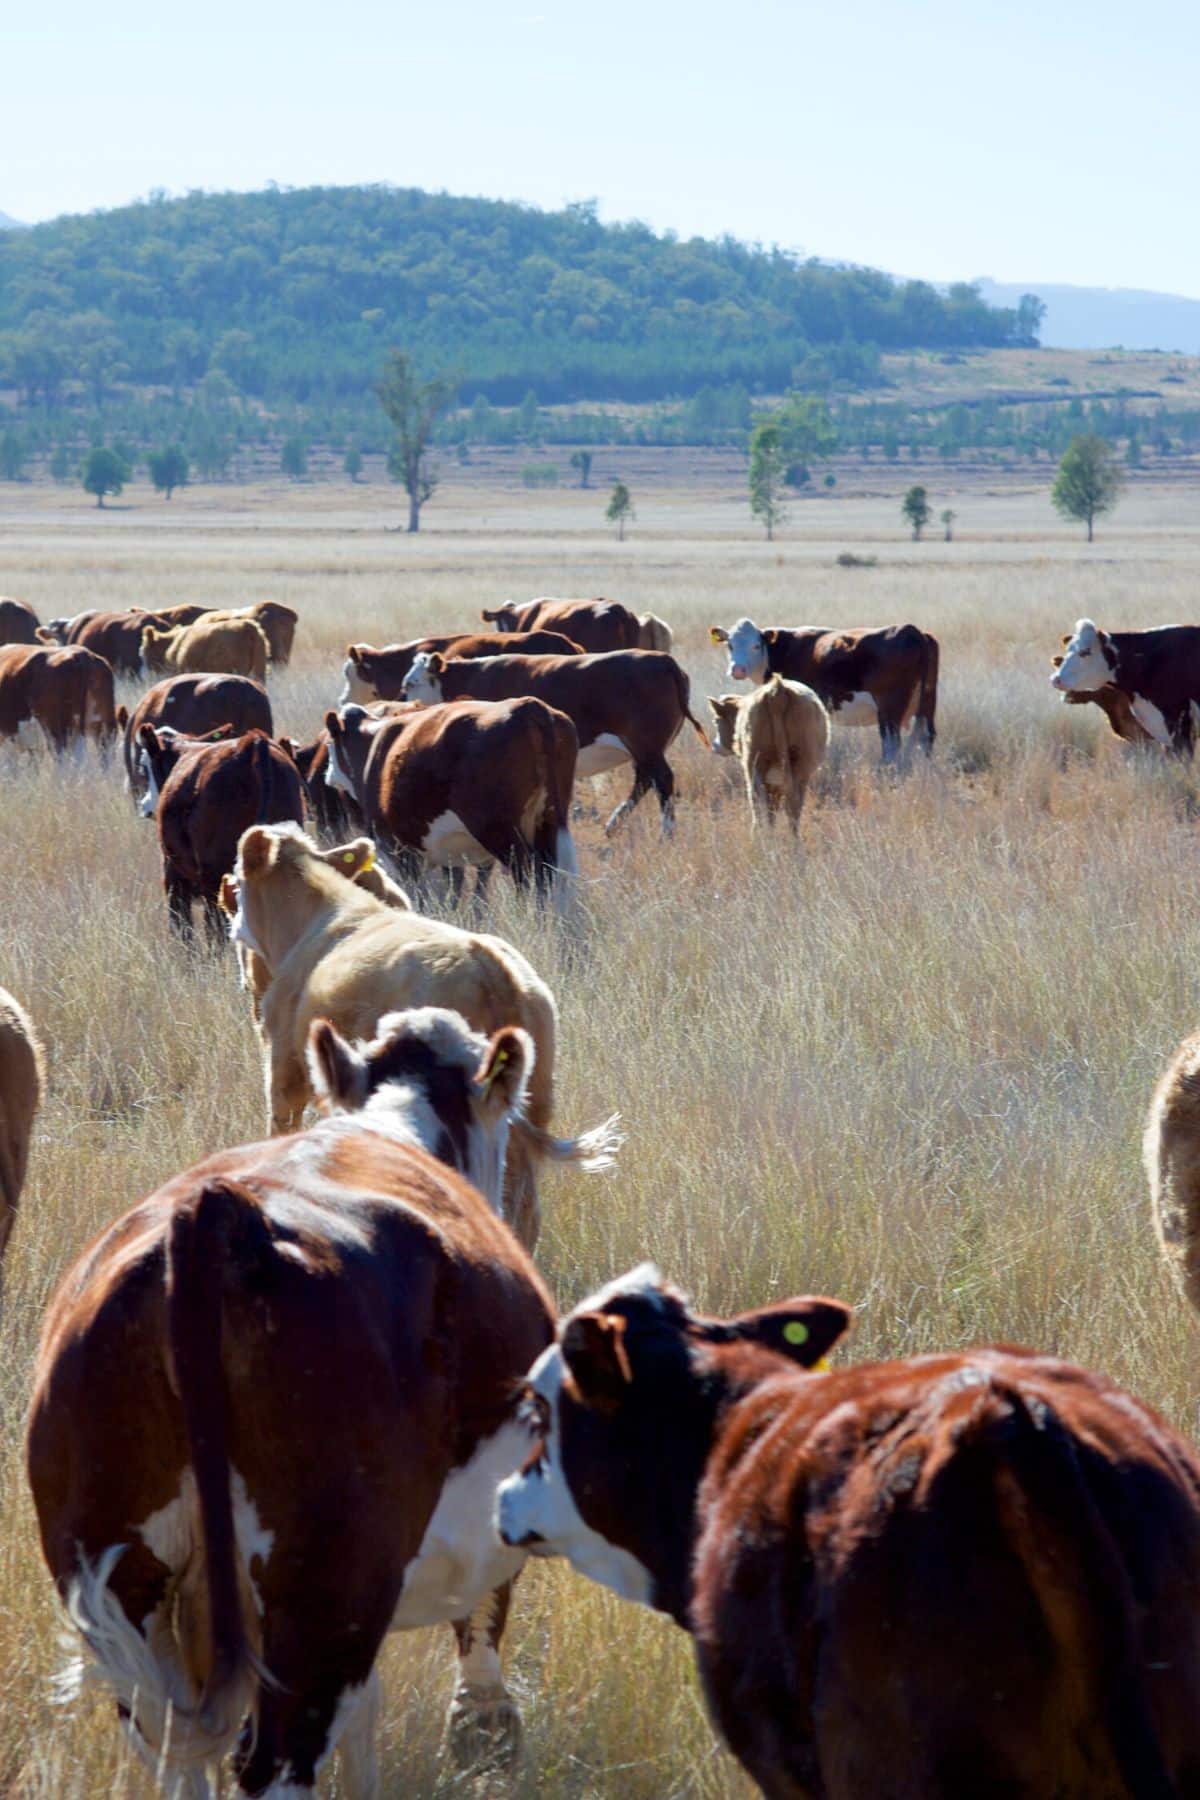 herd of grass fed cattle in a grassy field.